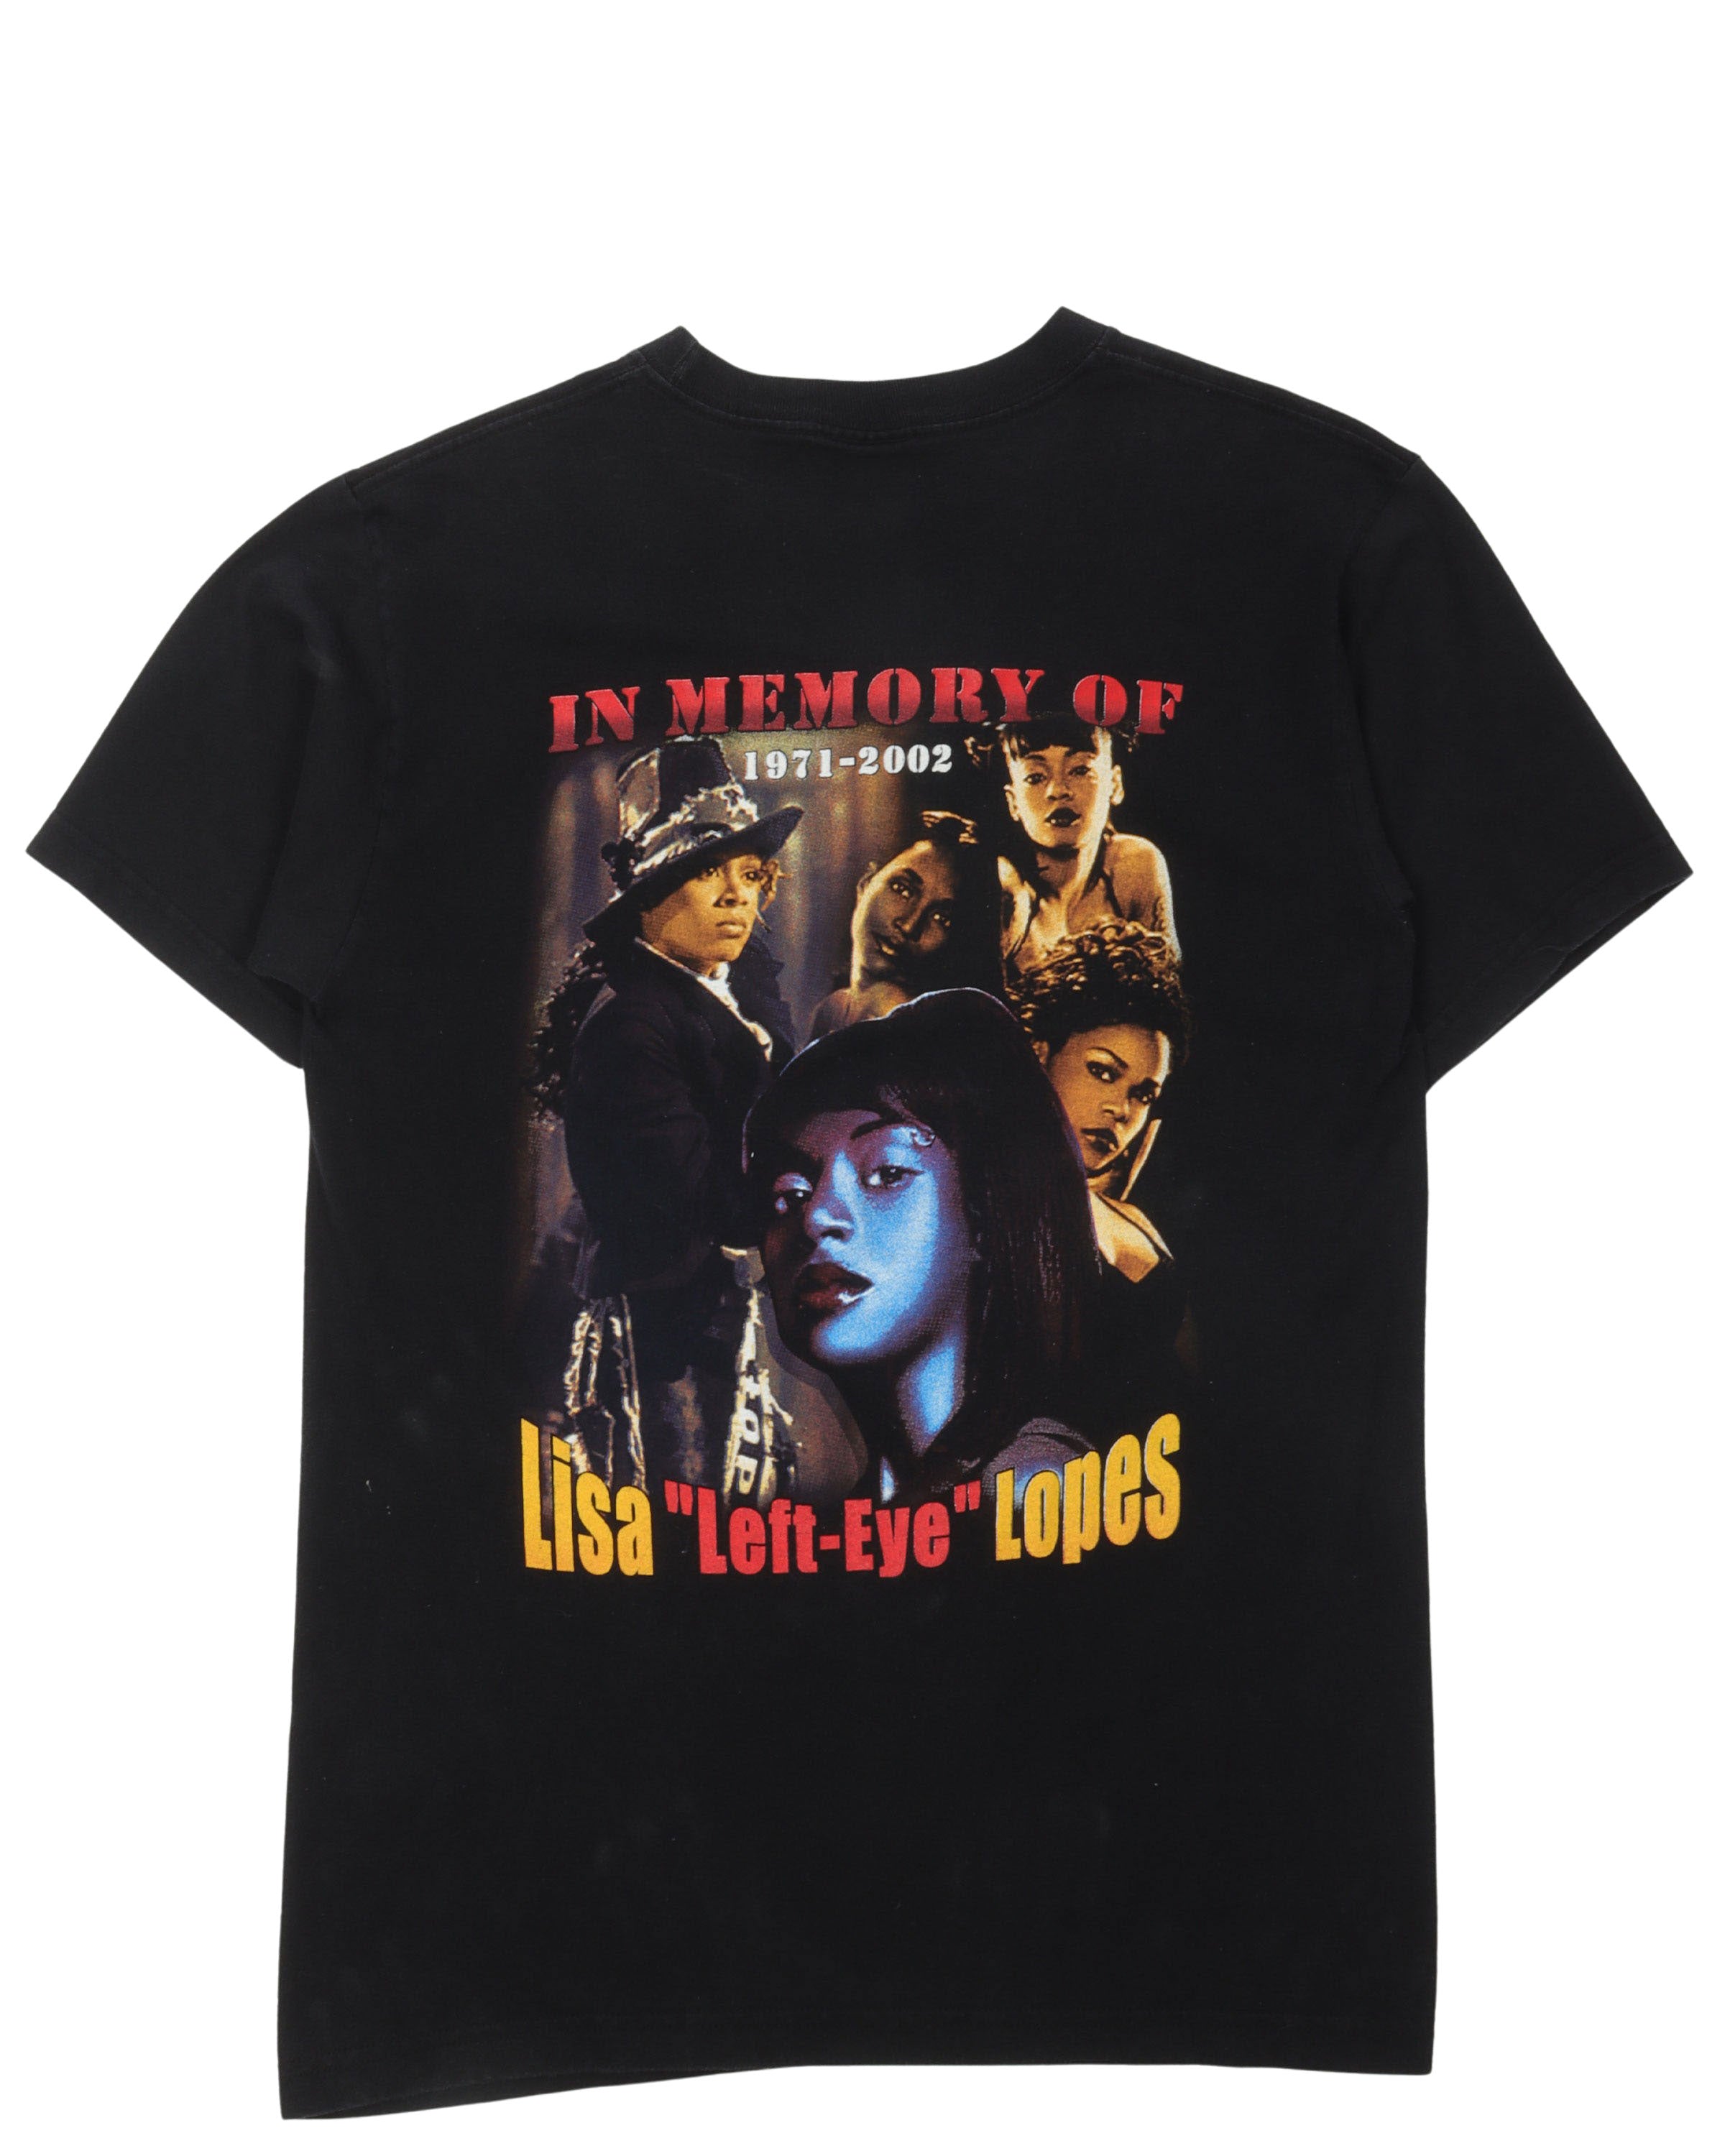 Lisa Lopes "Crazy Sexy Cool" T-Shirt